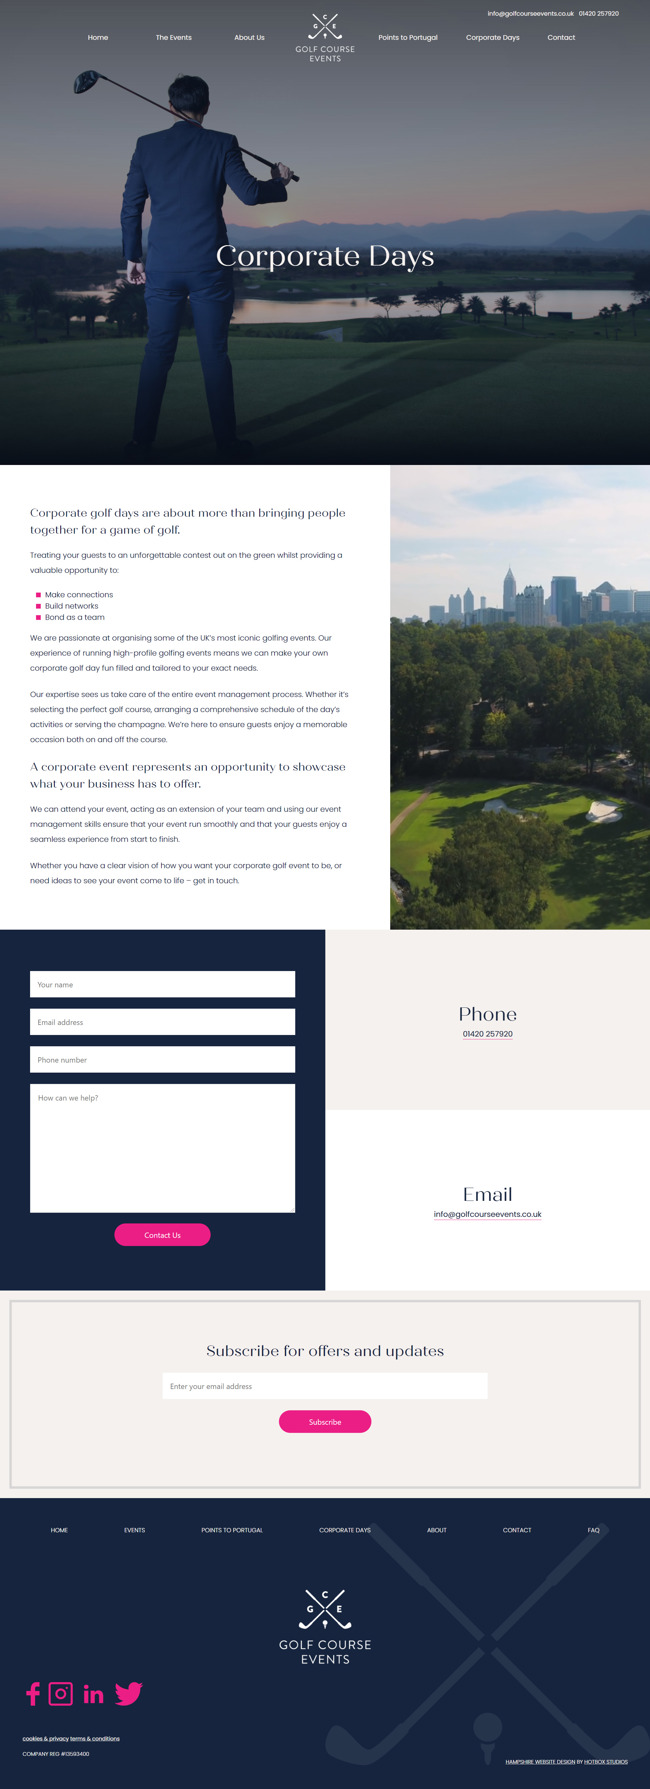 Golf Course Events Website Design And Wordpress Web Development SP012 Corporate Days